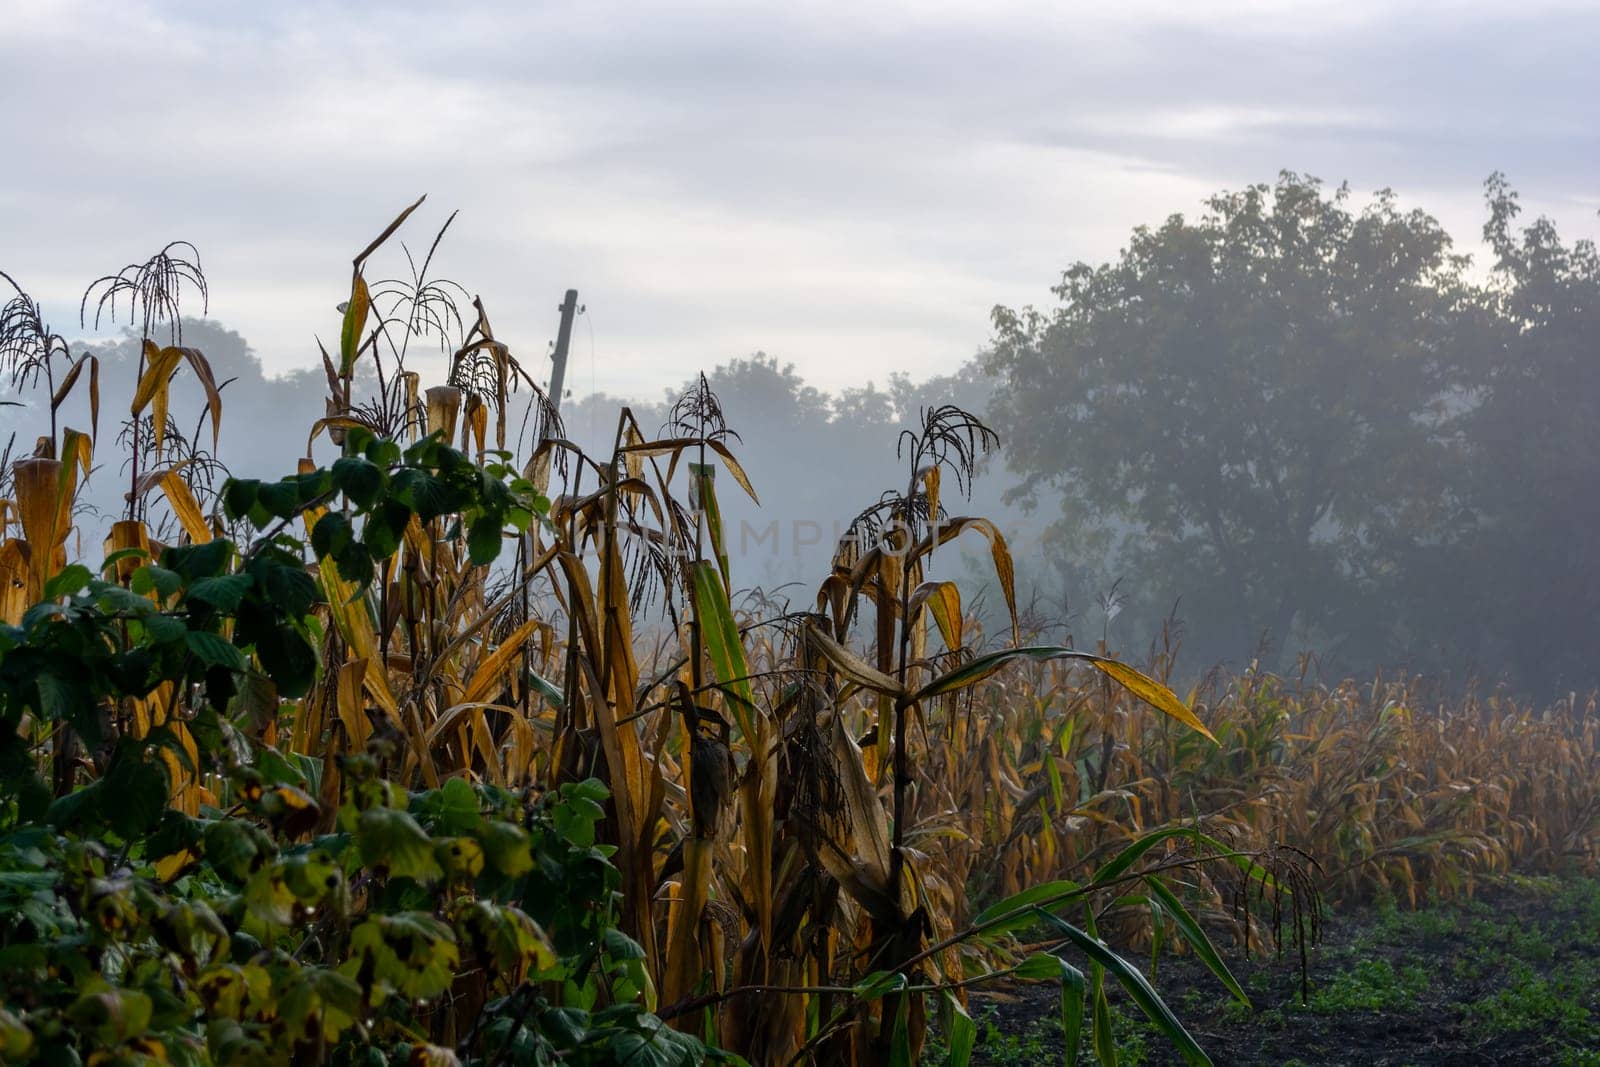 Corn in the vegetable garden on an early foggy morning. Autumn theme.